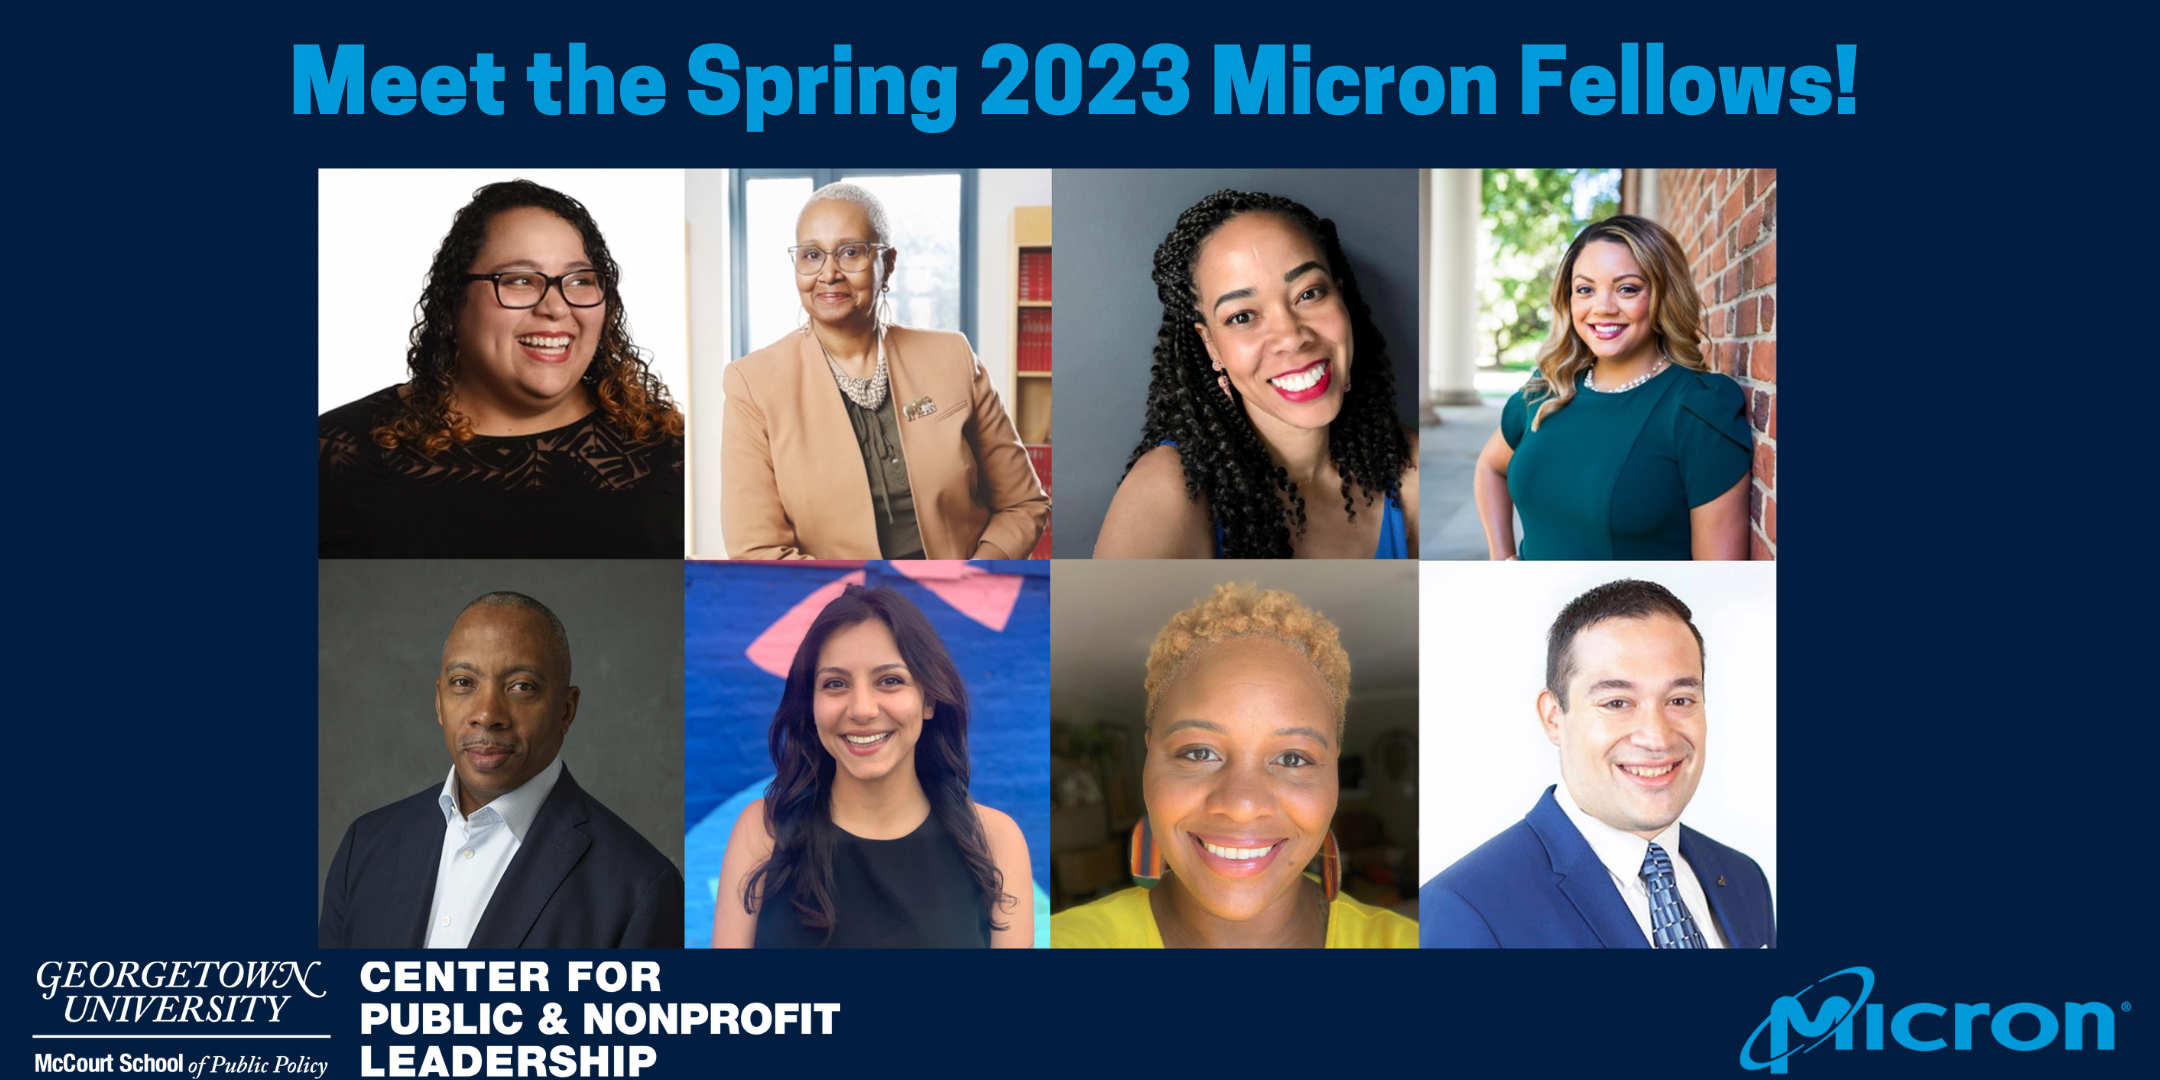 Meet the Spring 2023 Micron Fellows